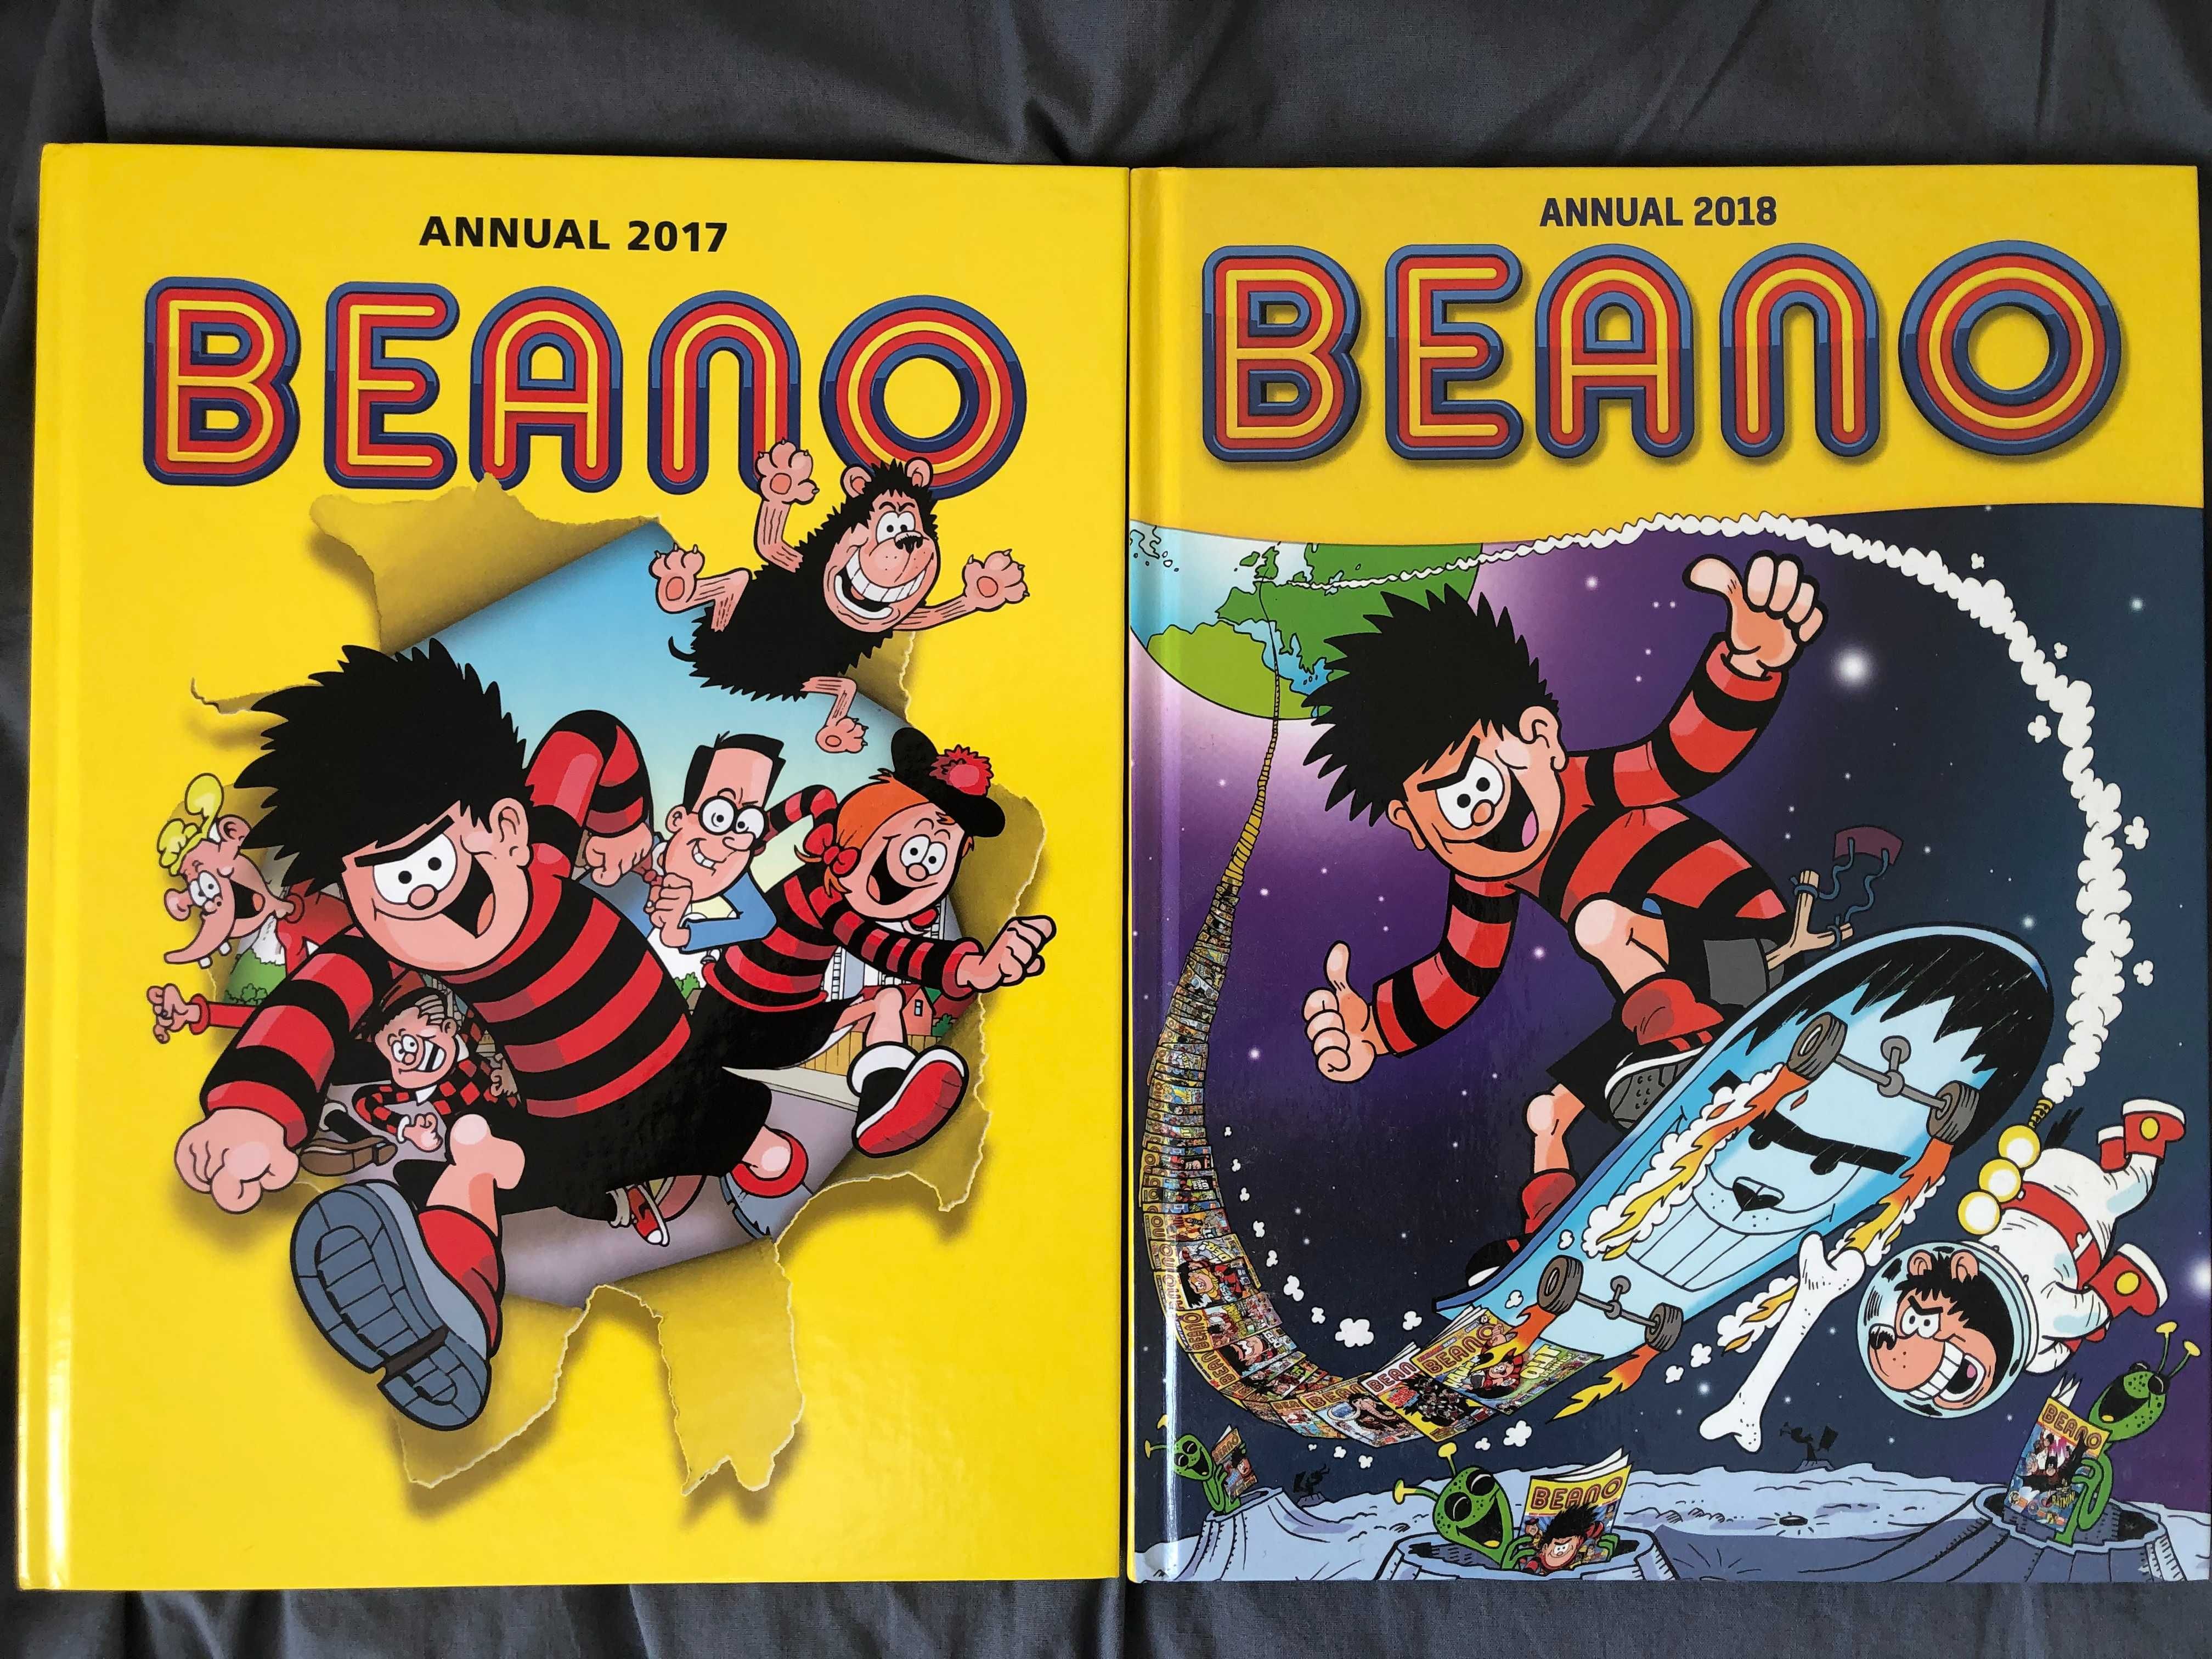 The Beano Book - Banda Desenhada